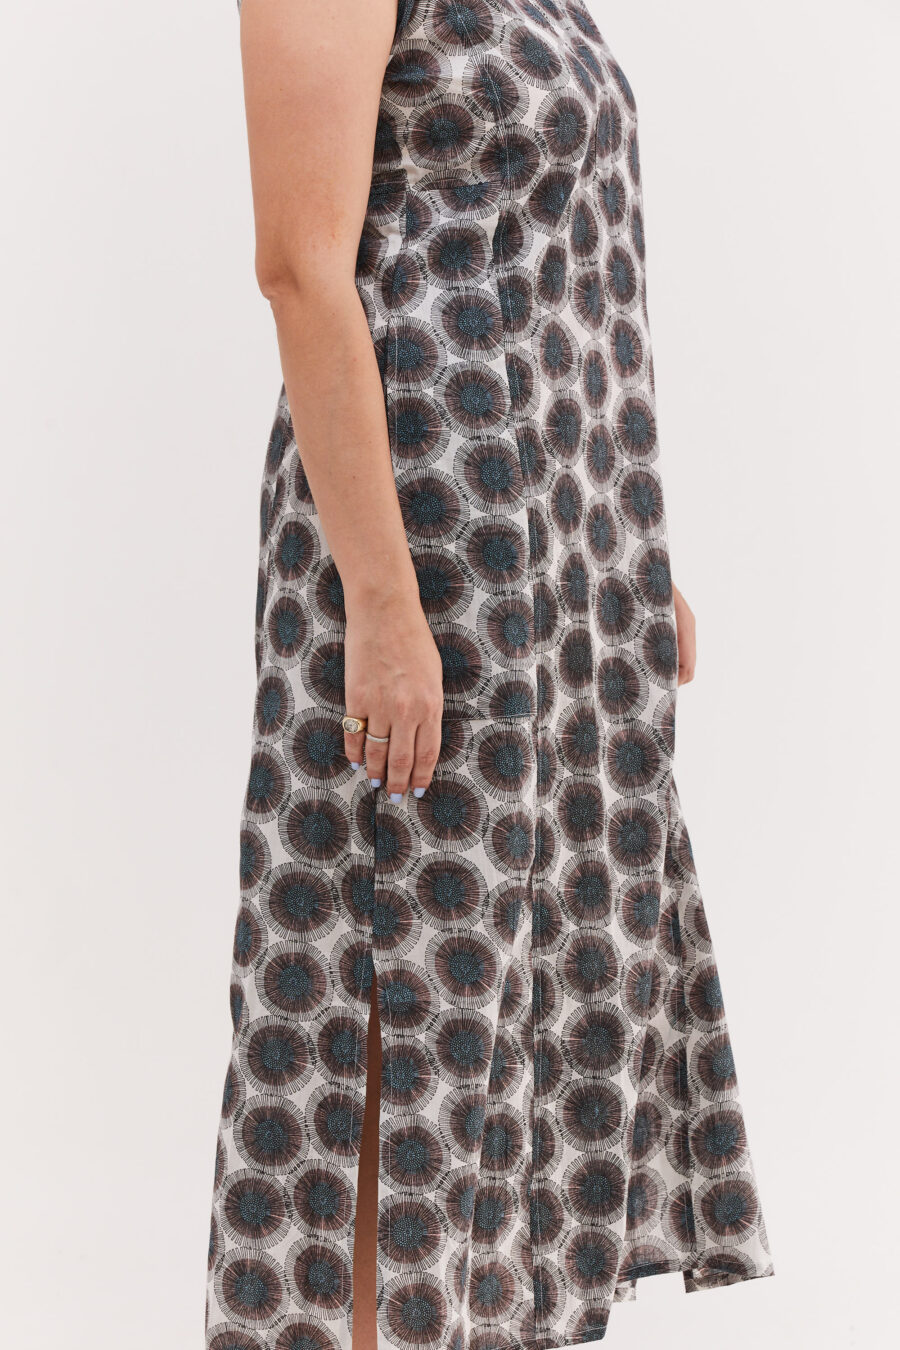 Jalabiya dress without sleeve | Uniquely designed dress - Groundsel print, white dress with purple-brown groundsel print